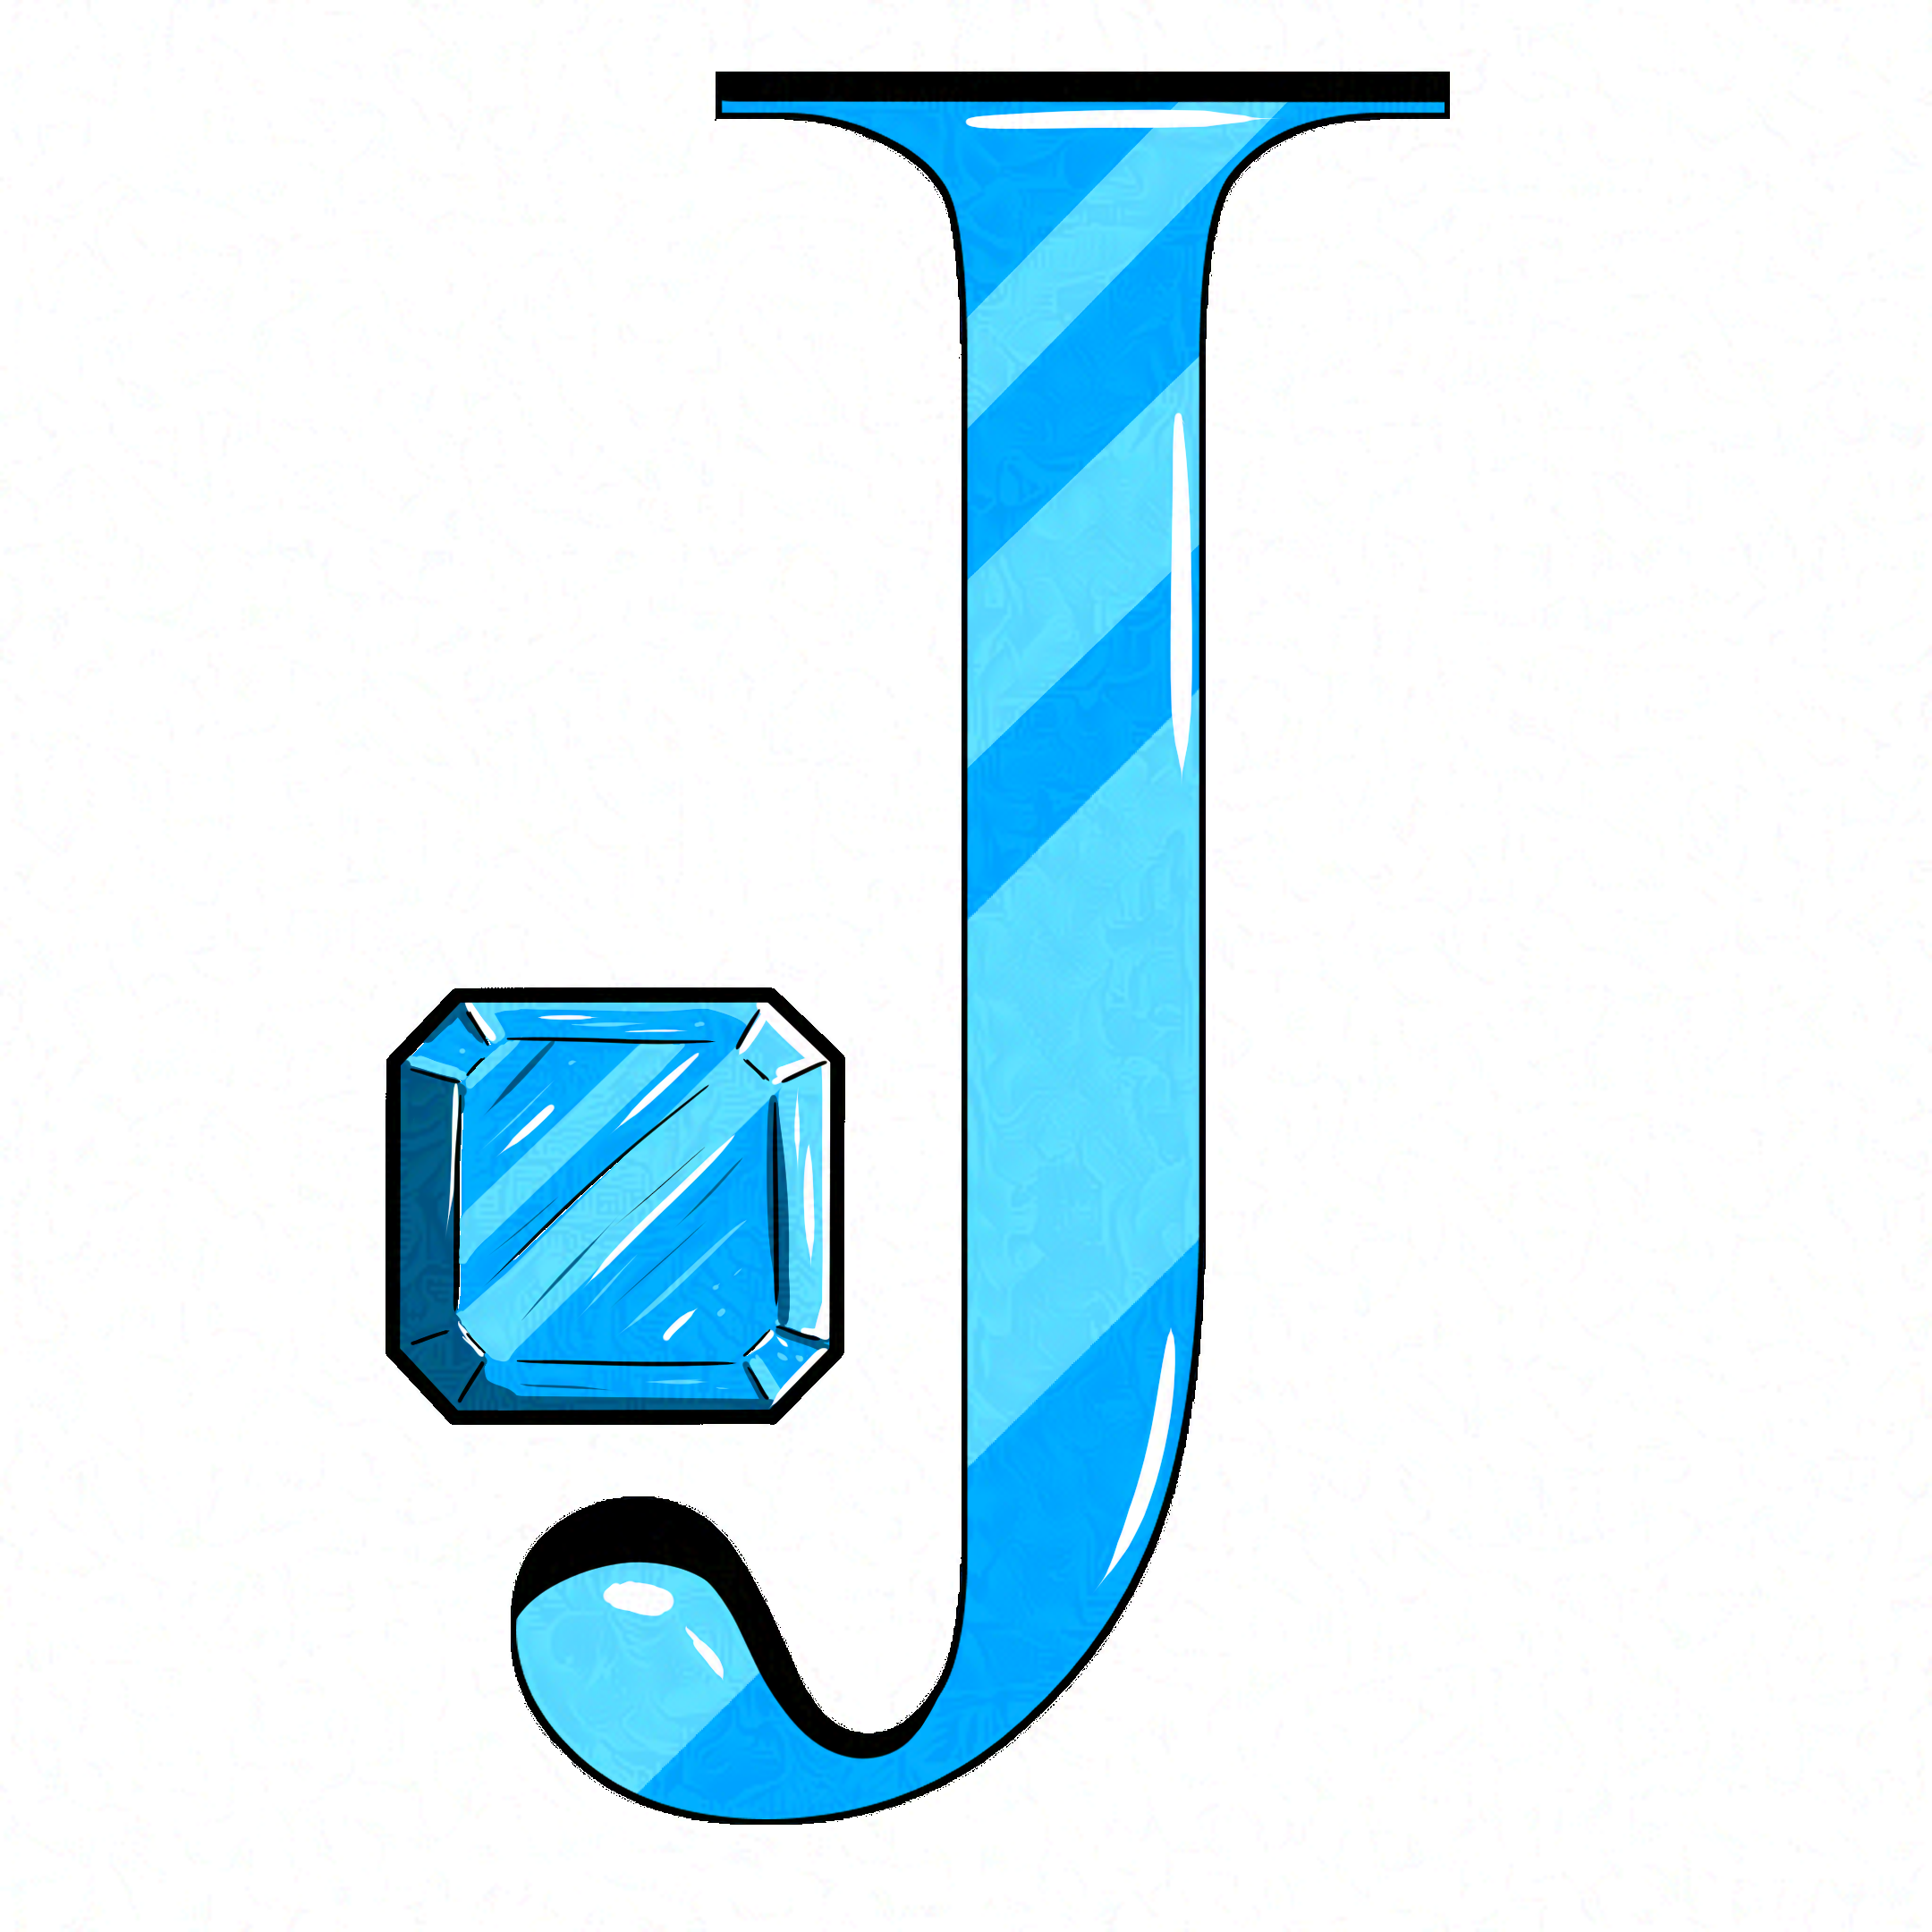 A sapphire jack icon.